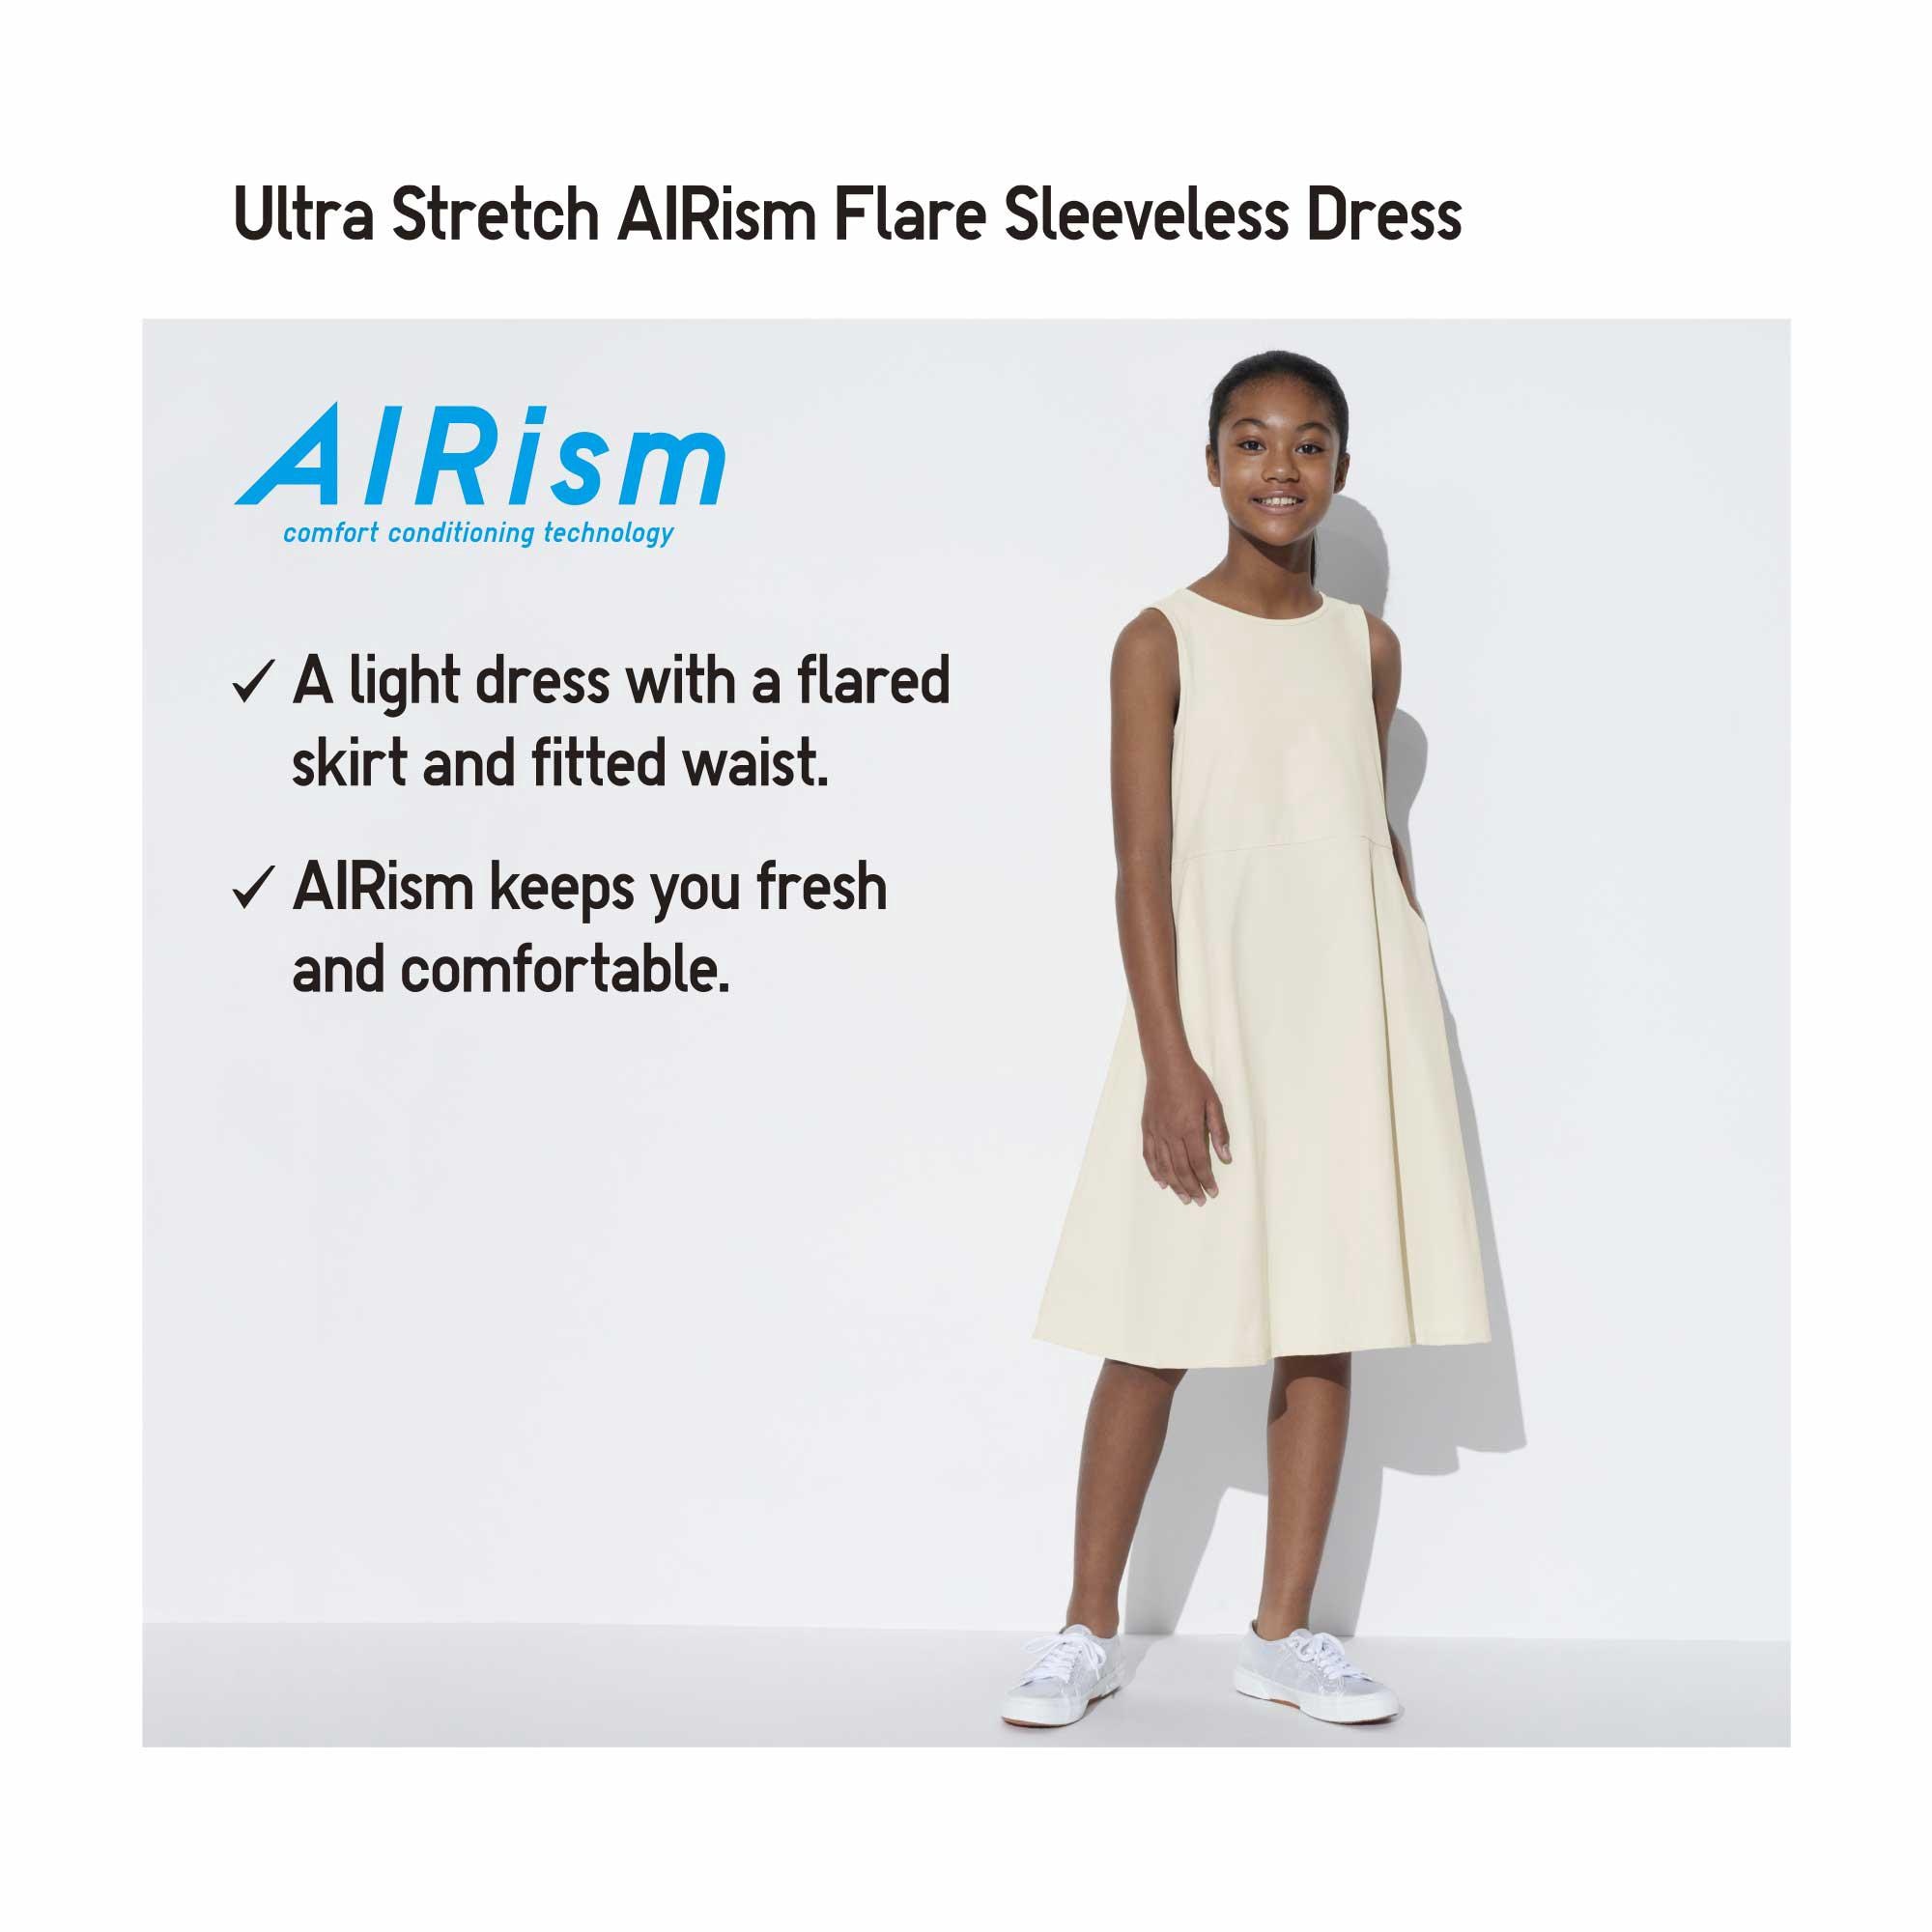 EXTRA STRETCH AIRism FLARE SLEEVELESS DRESS